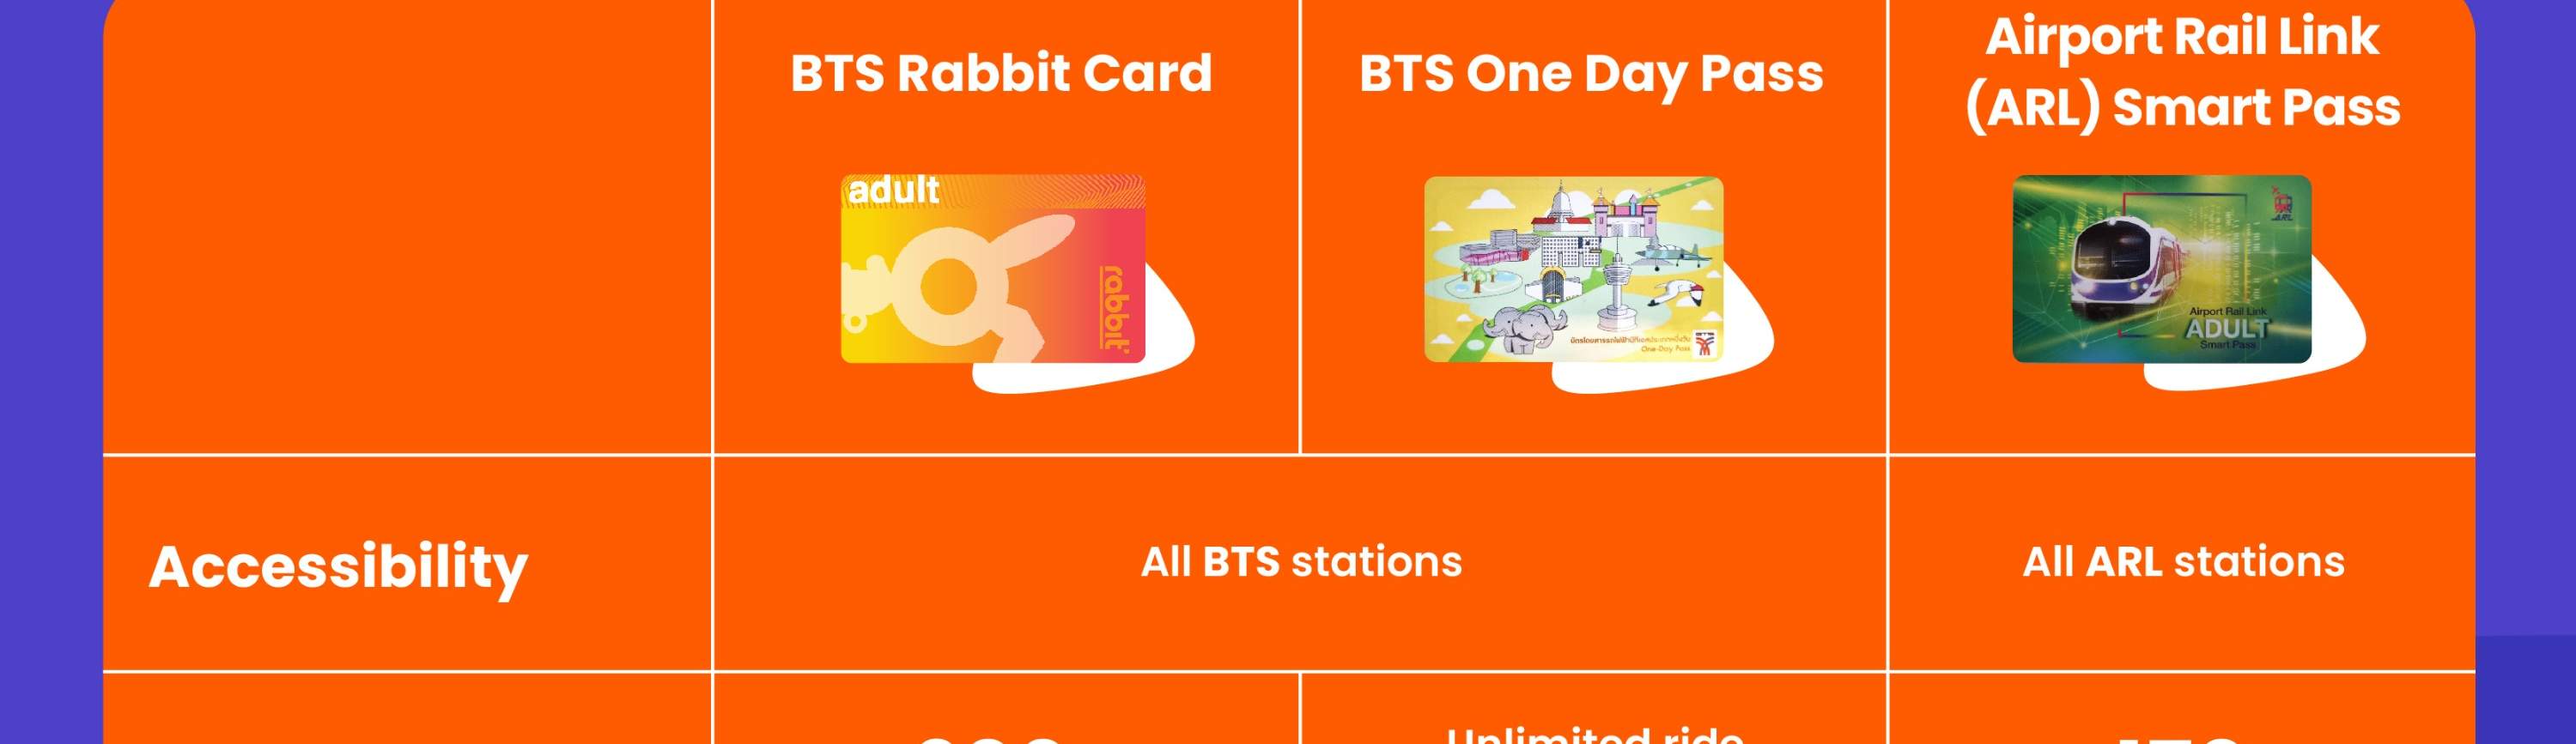 Rabbit Card, BTS One Day Pass